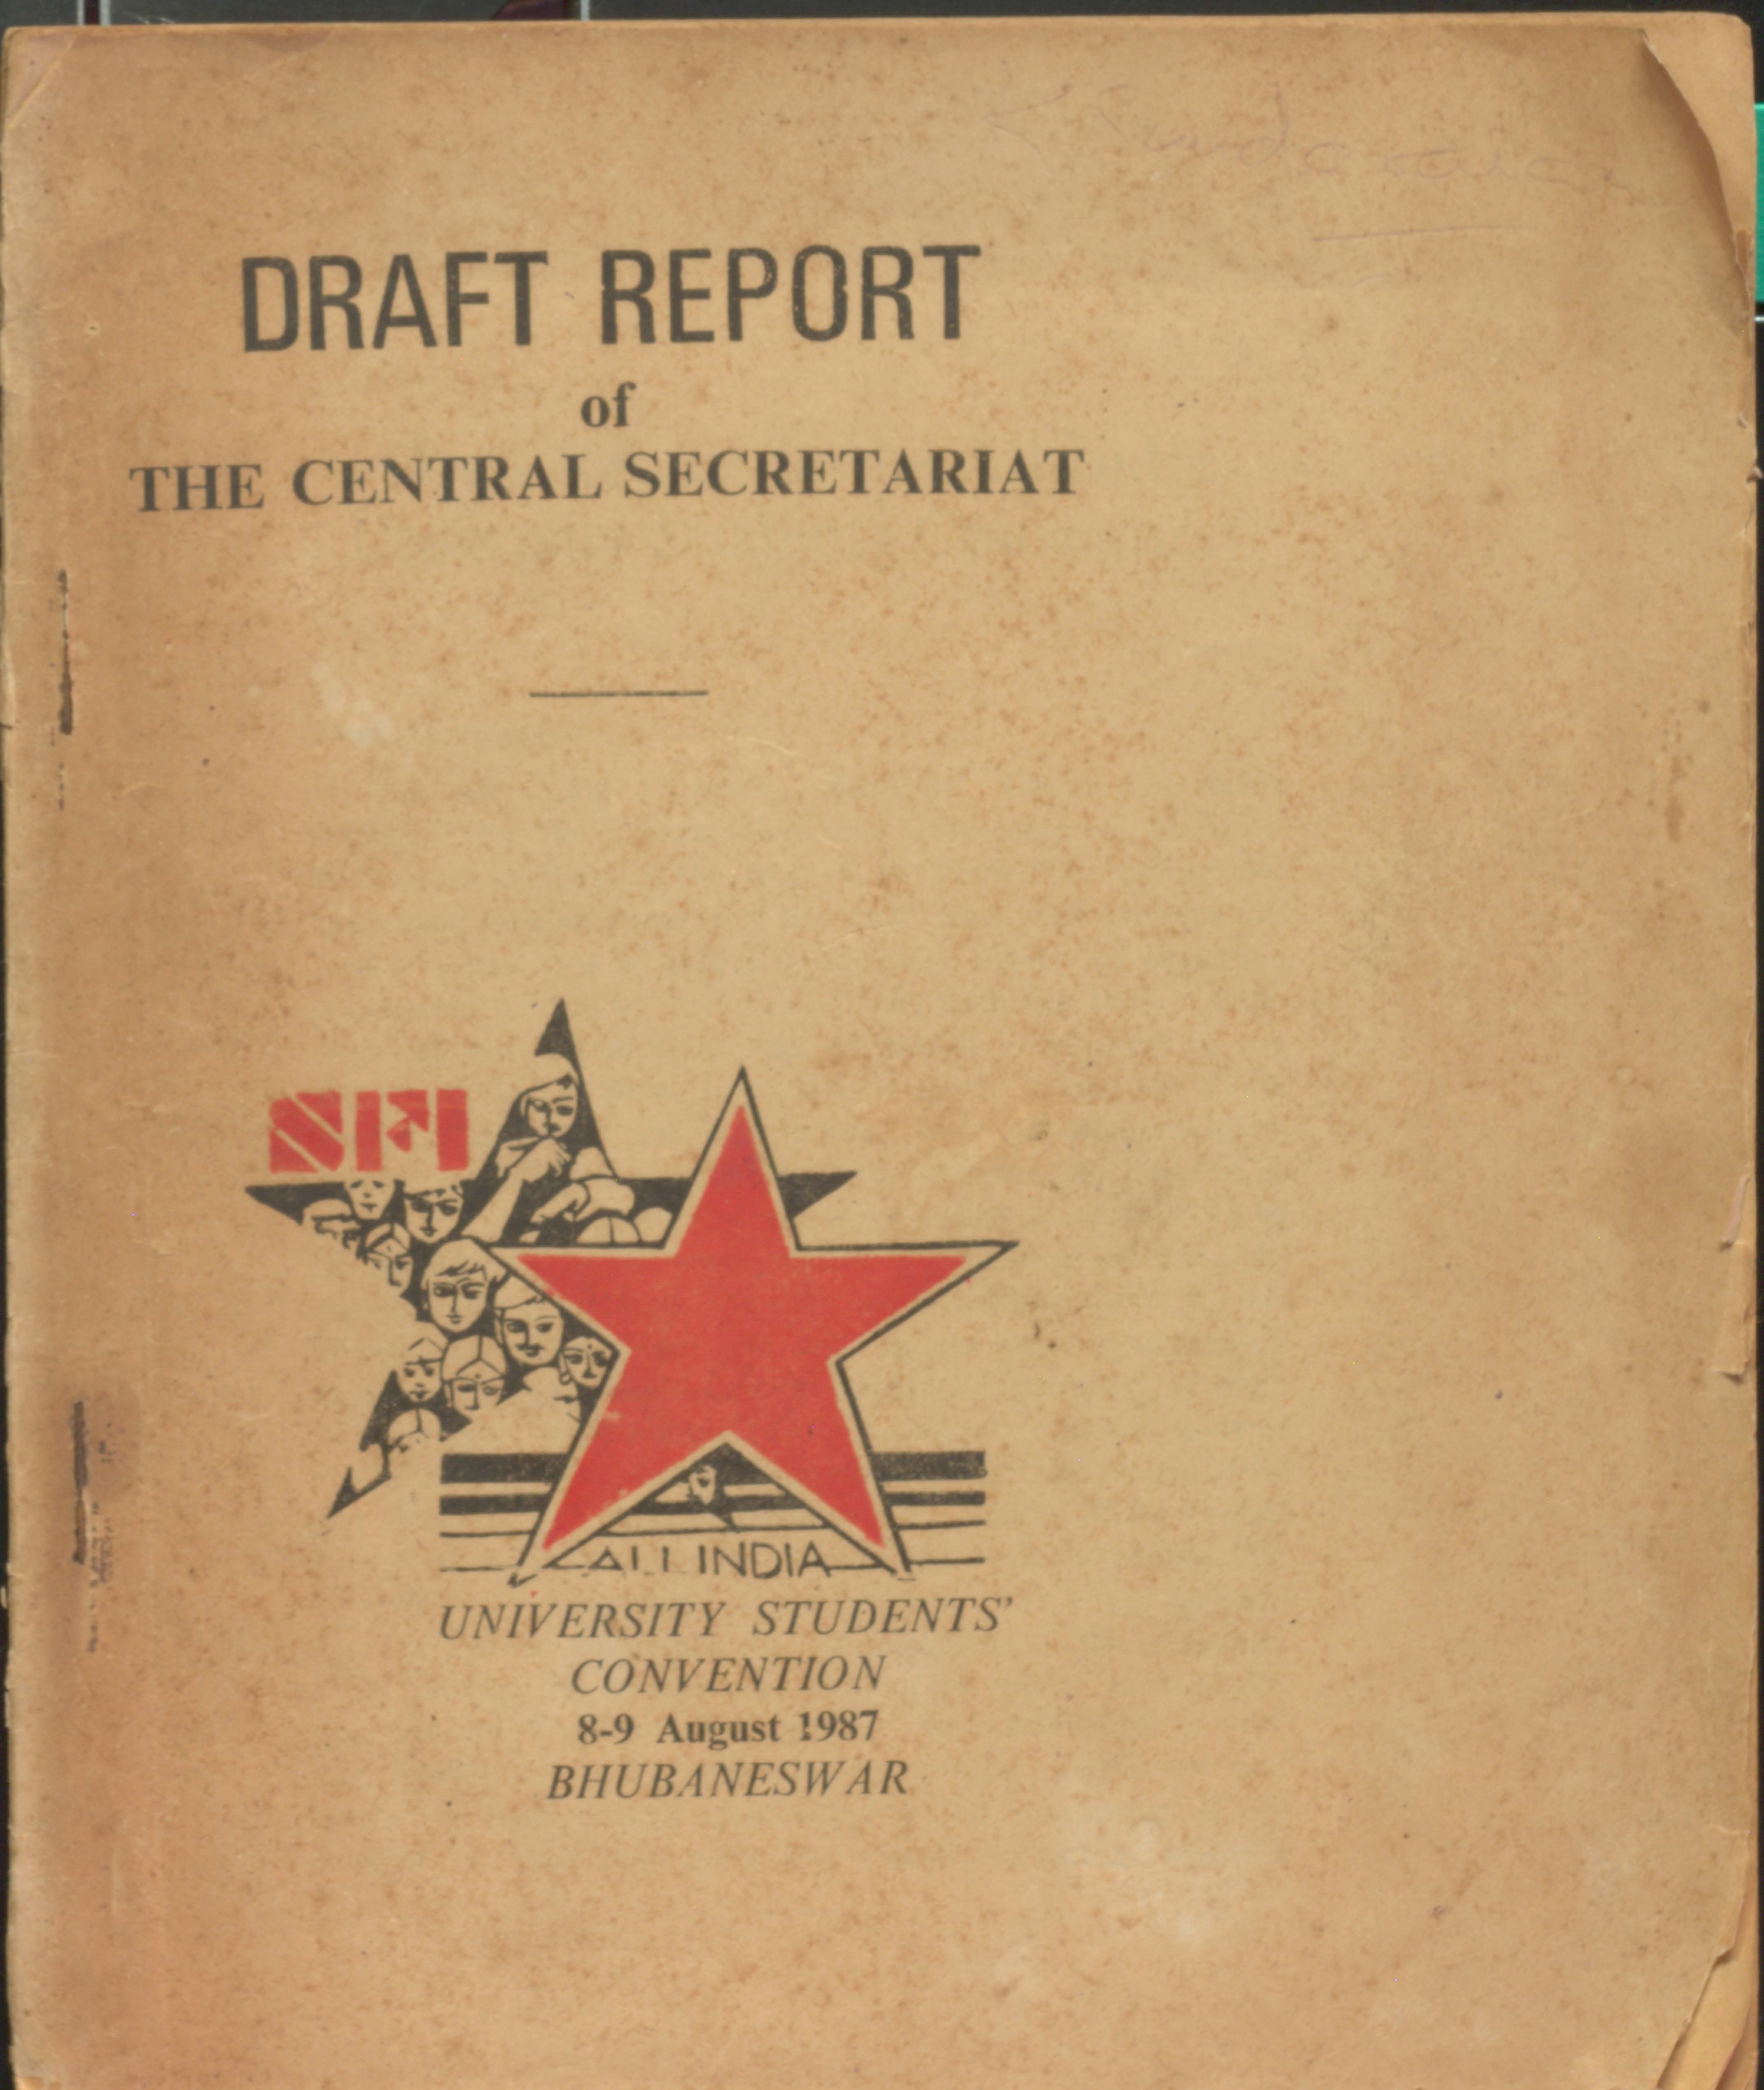 Draft Report The Central Secretariat 8-9 August 1987